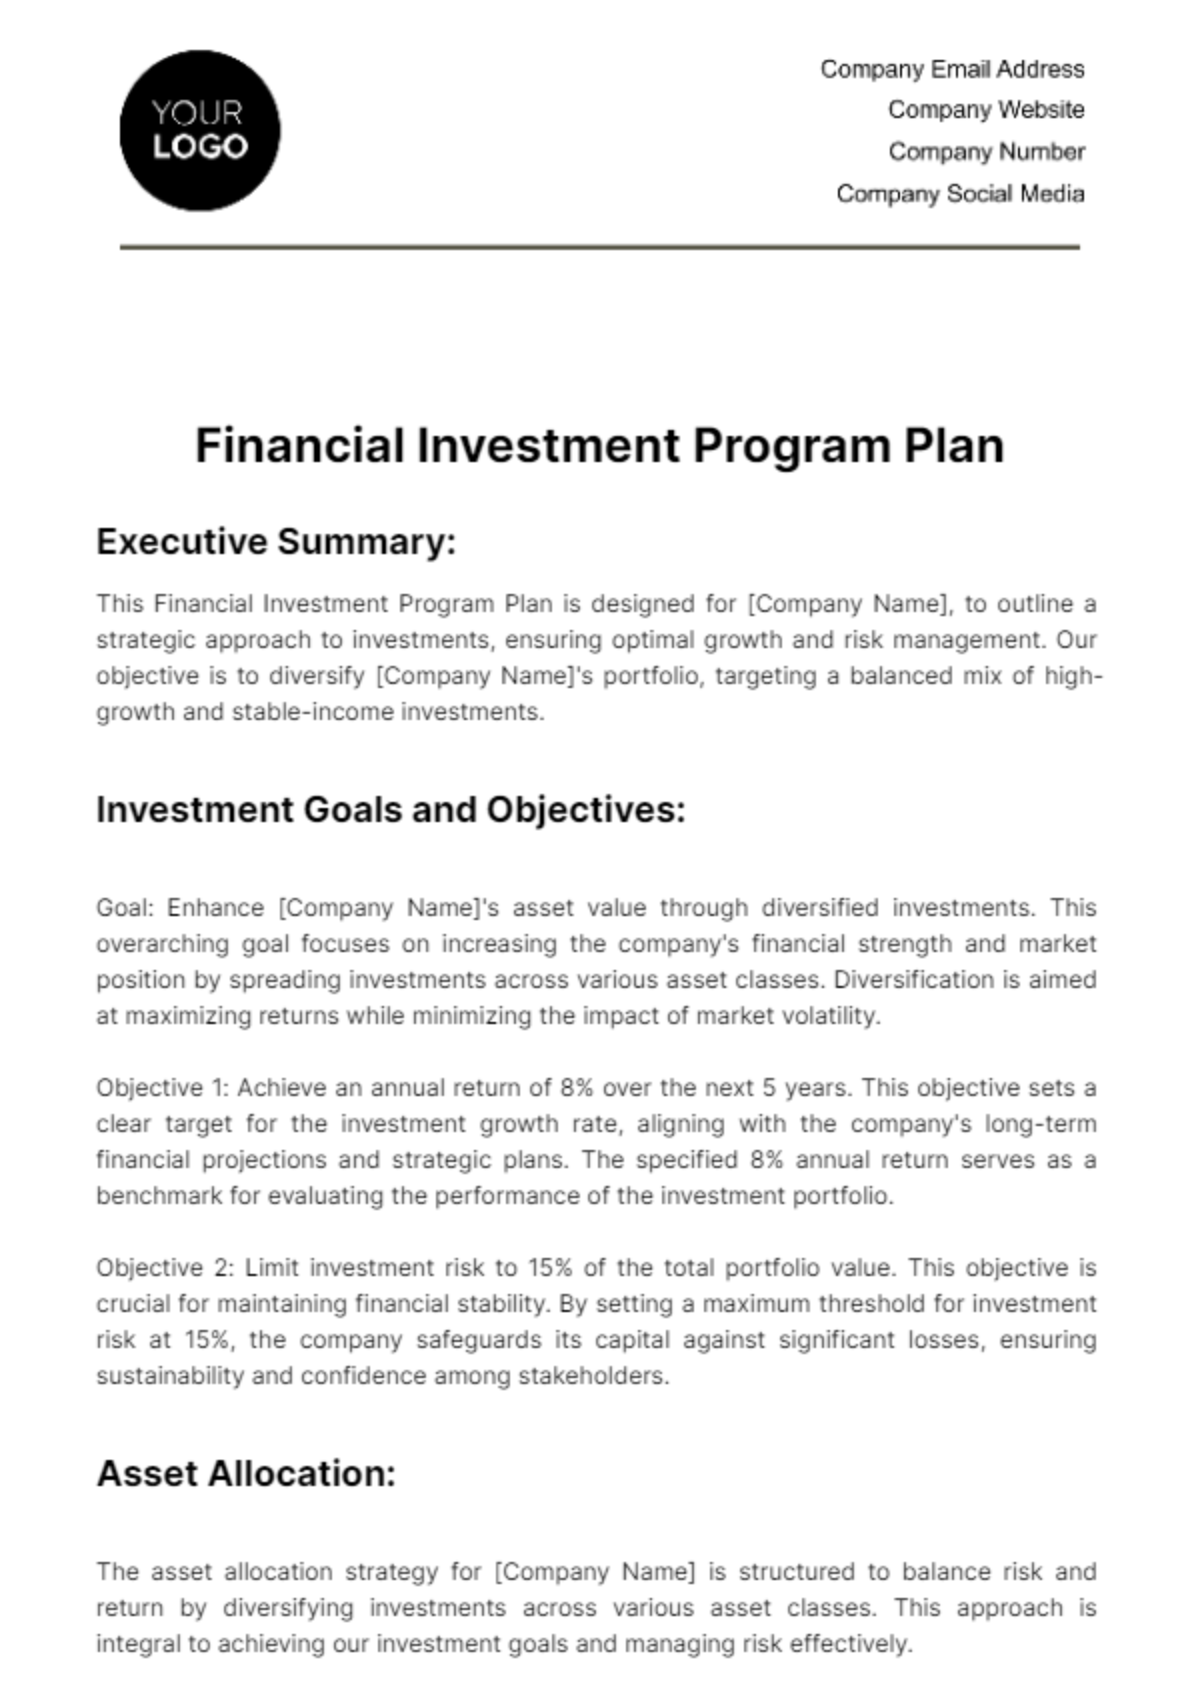 Financial Investment Program Plan Template